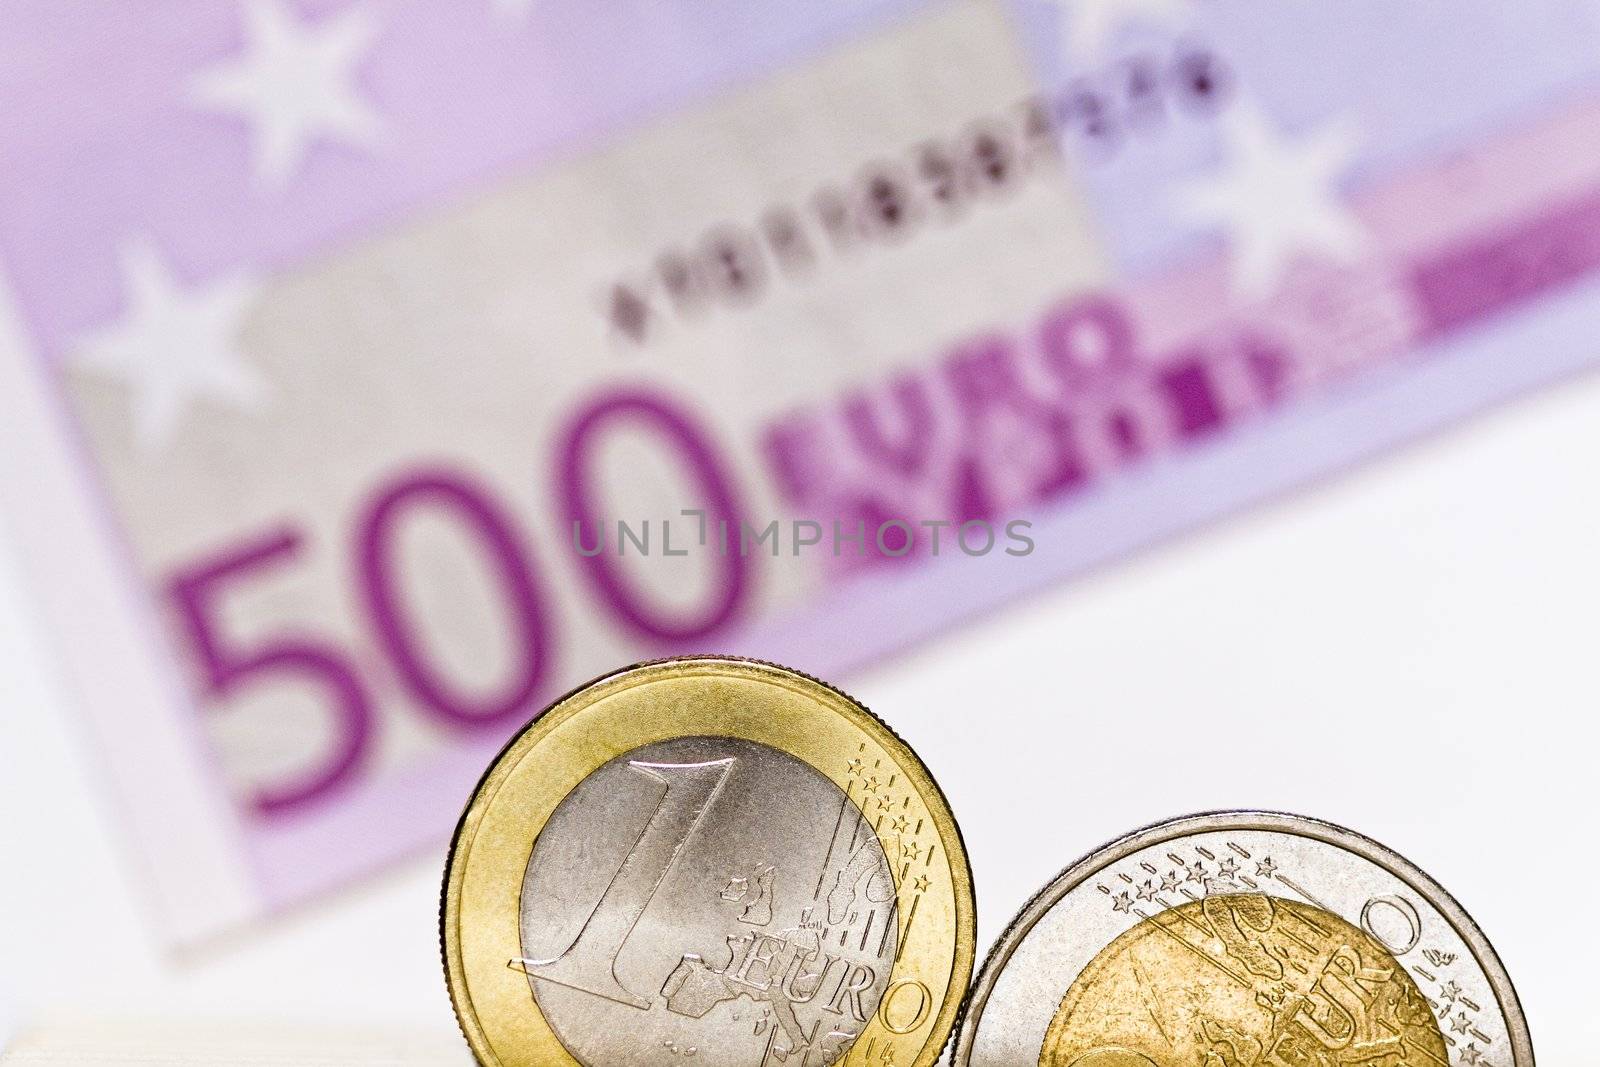 Euro coins, euro bill by Gbuglok